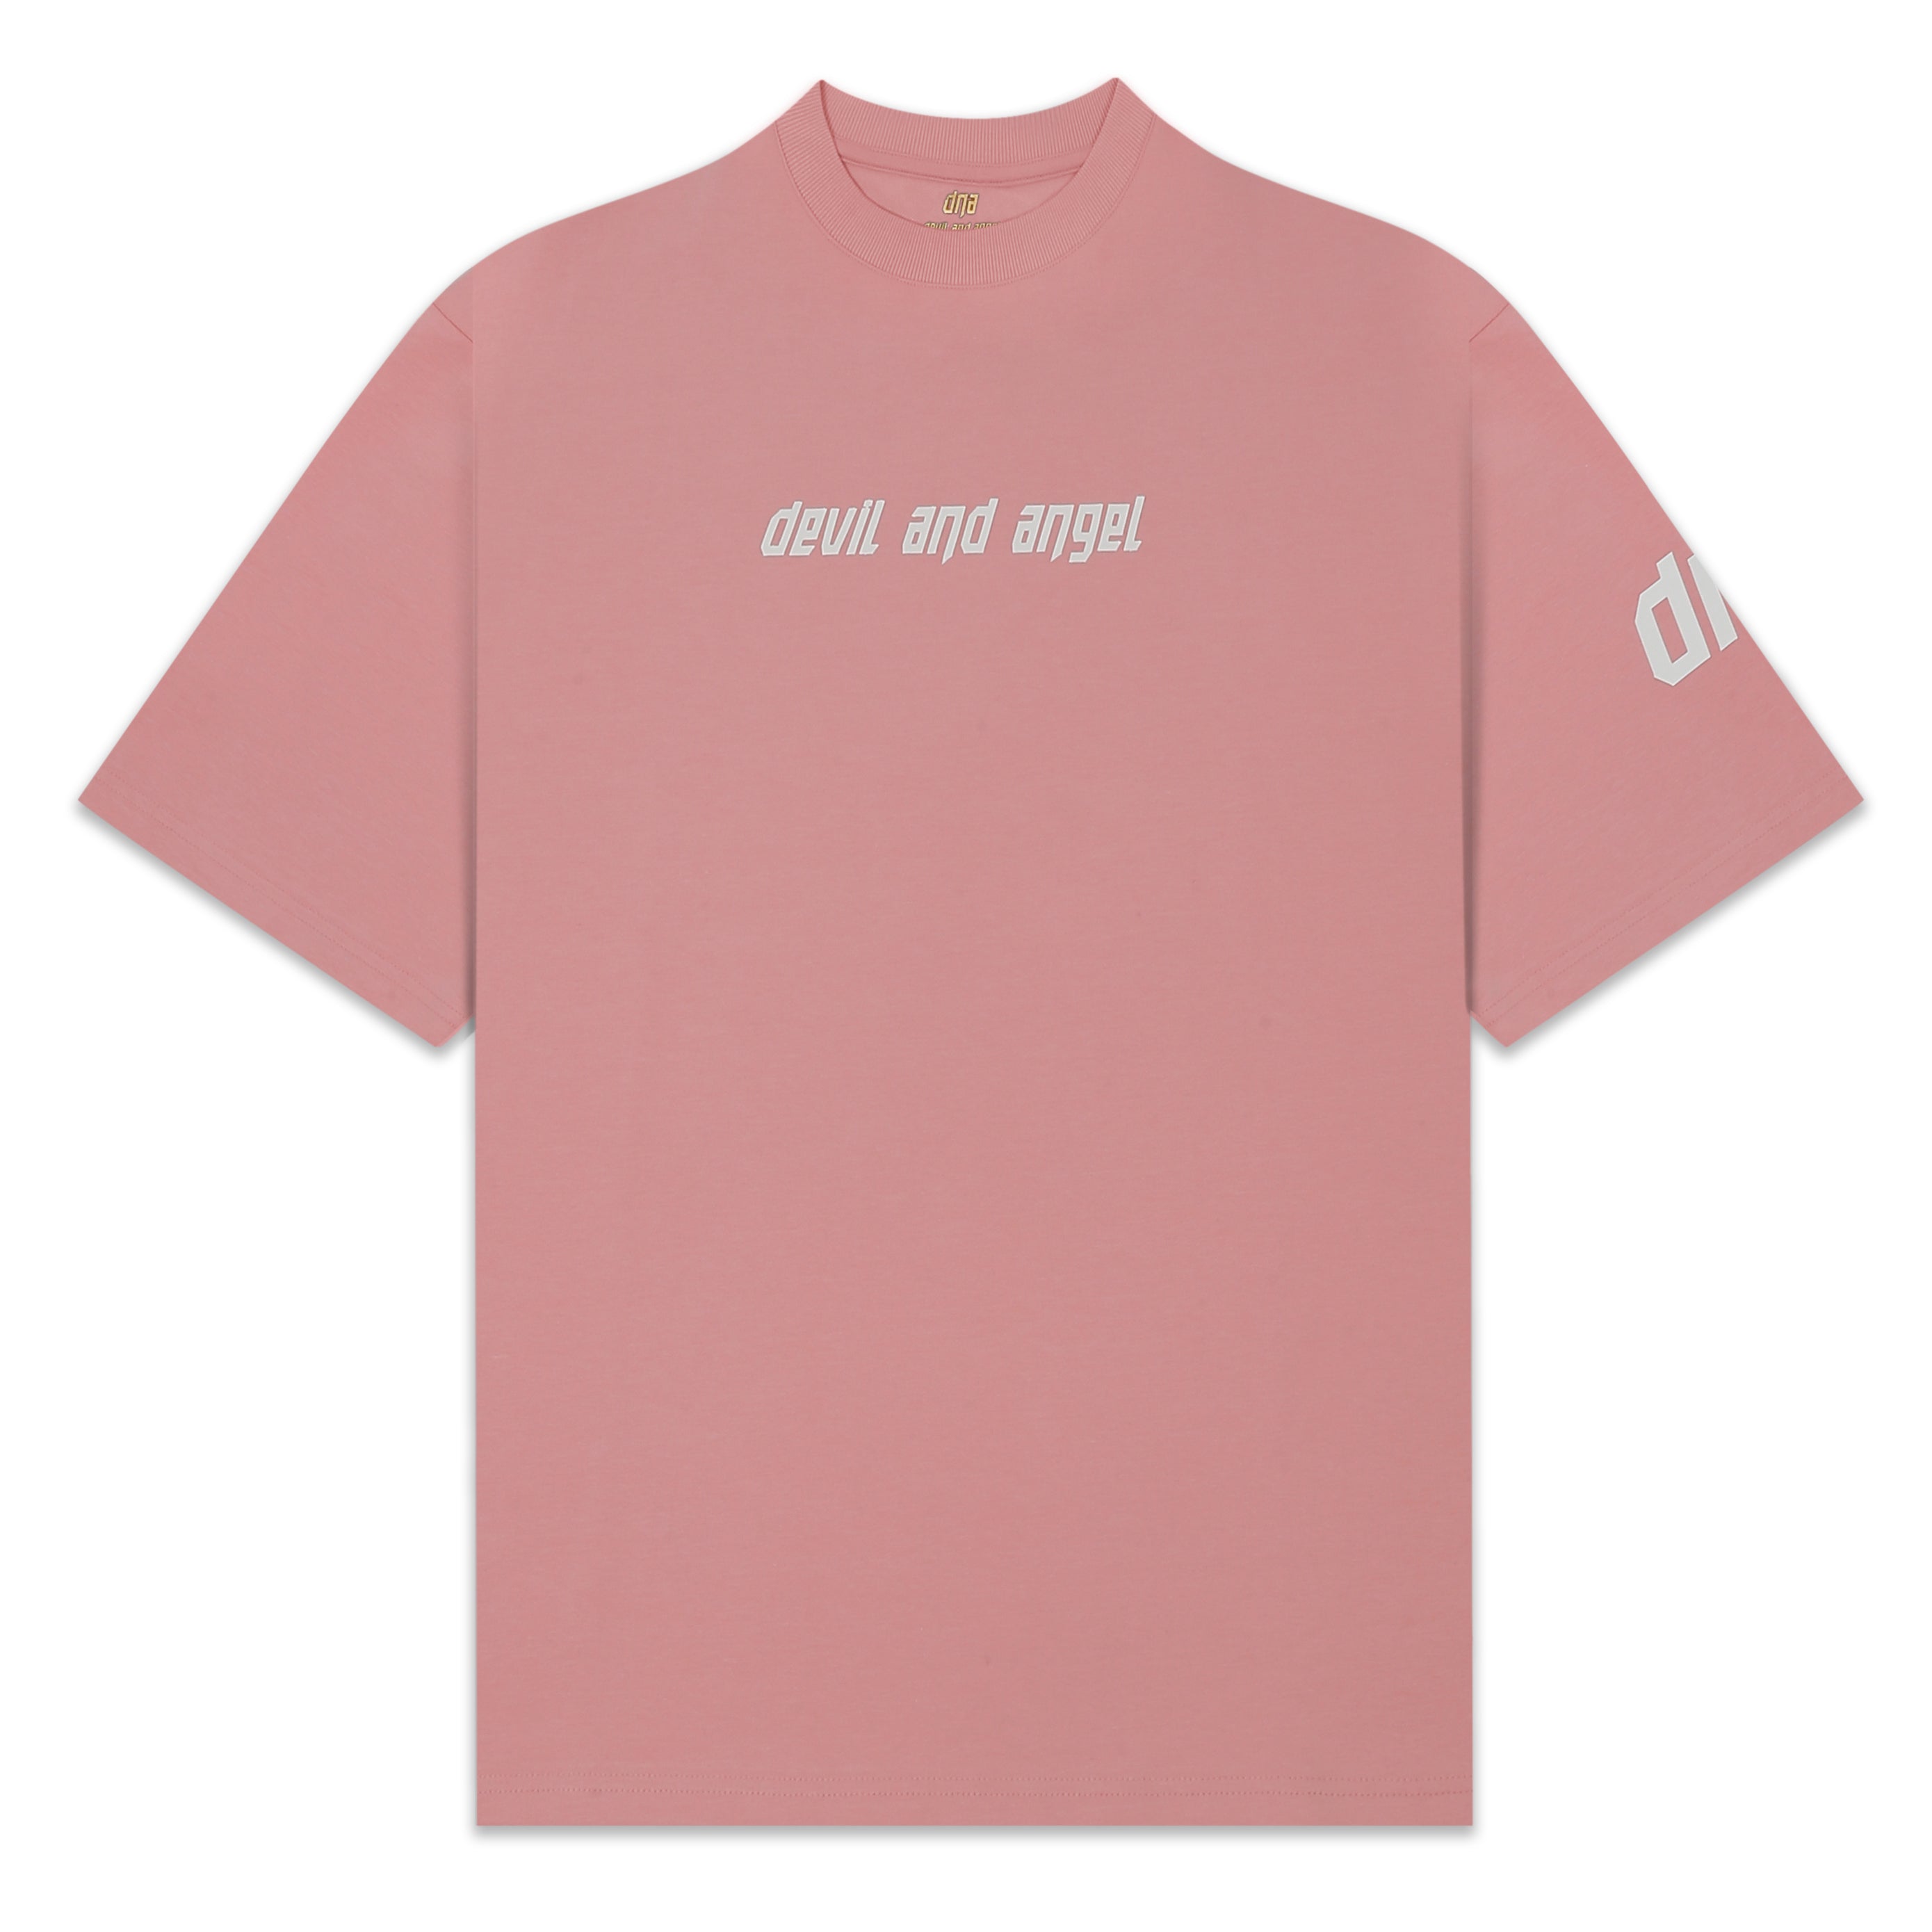 Basic DNA T-Shirt - Pink